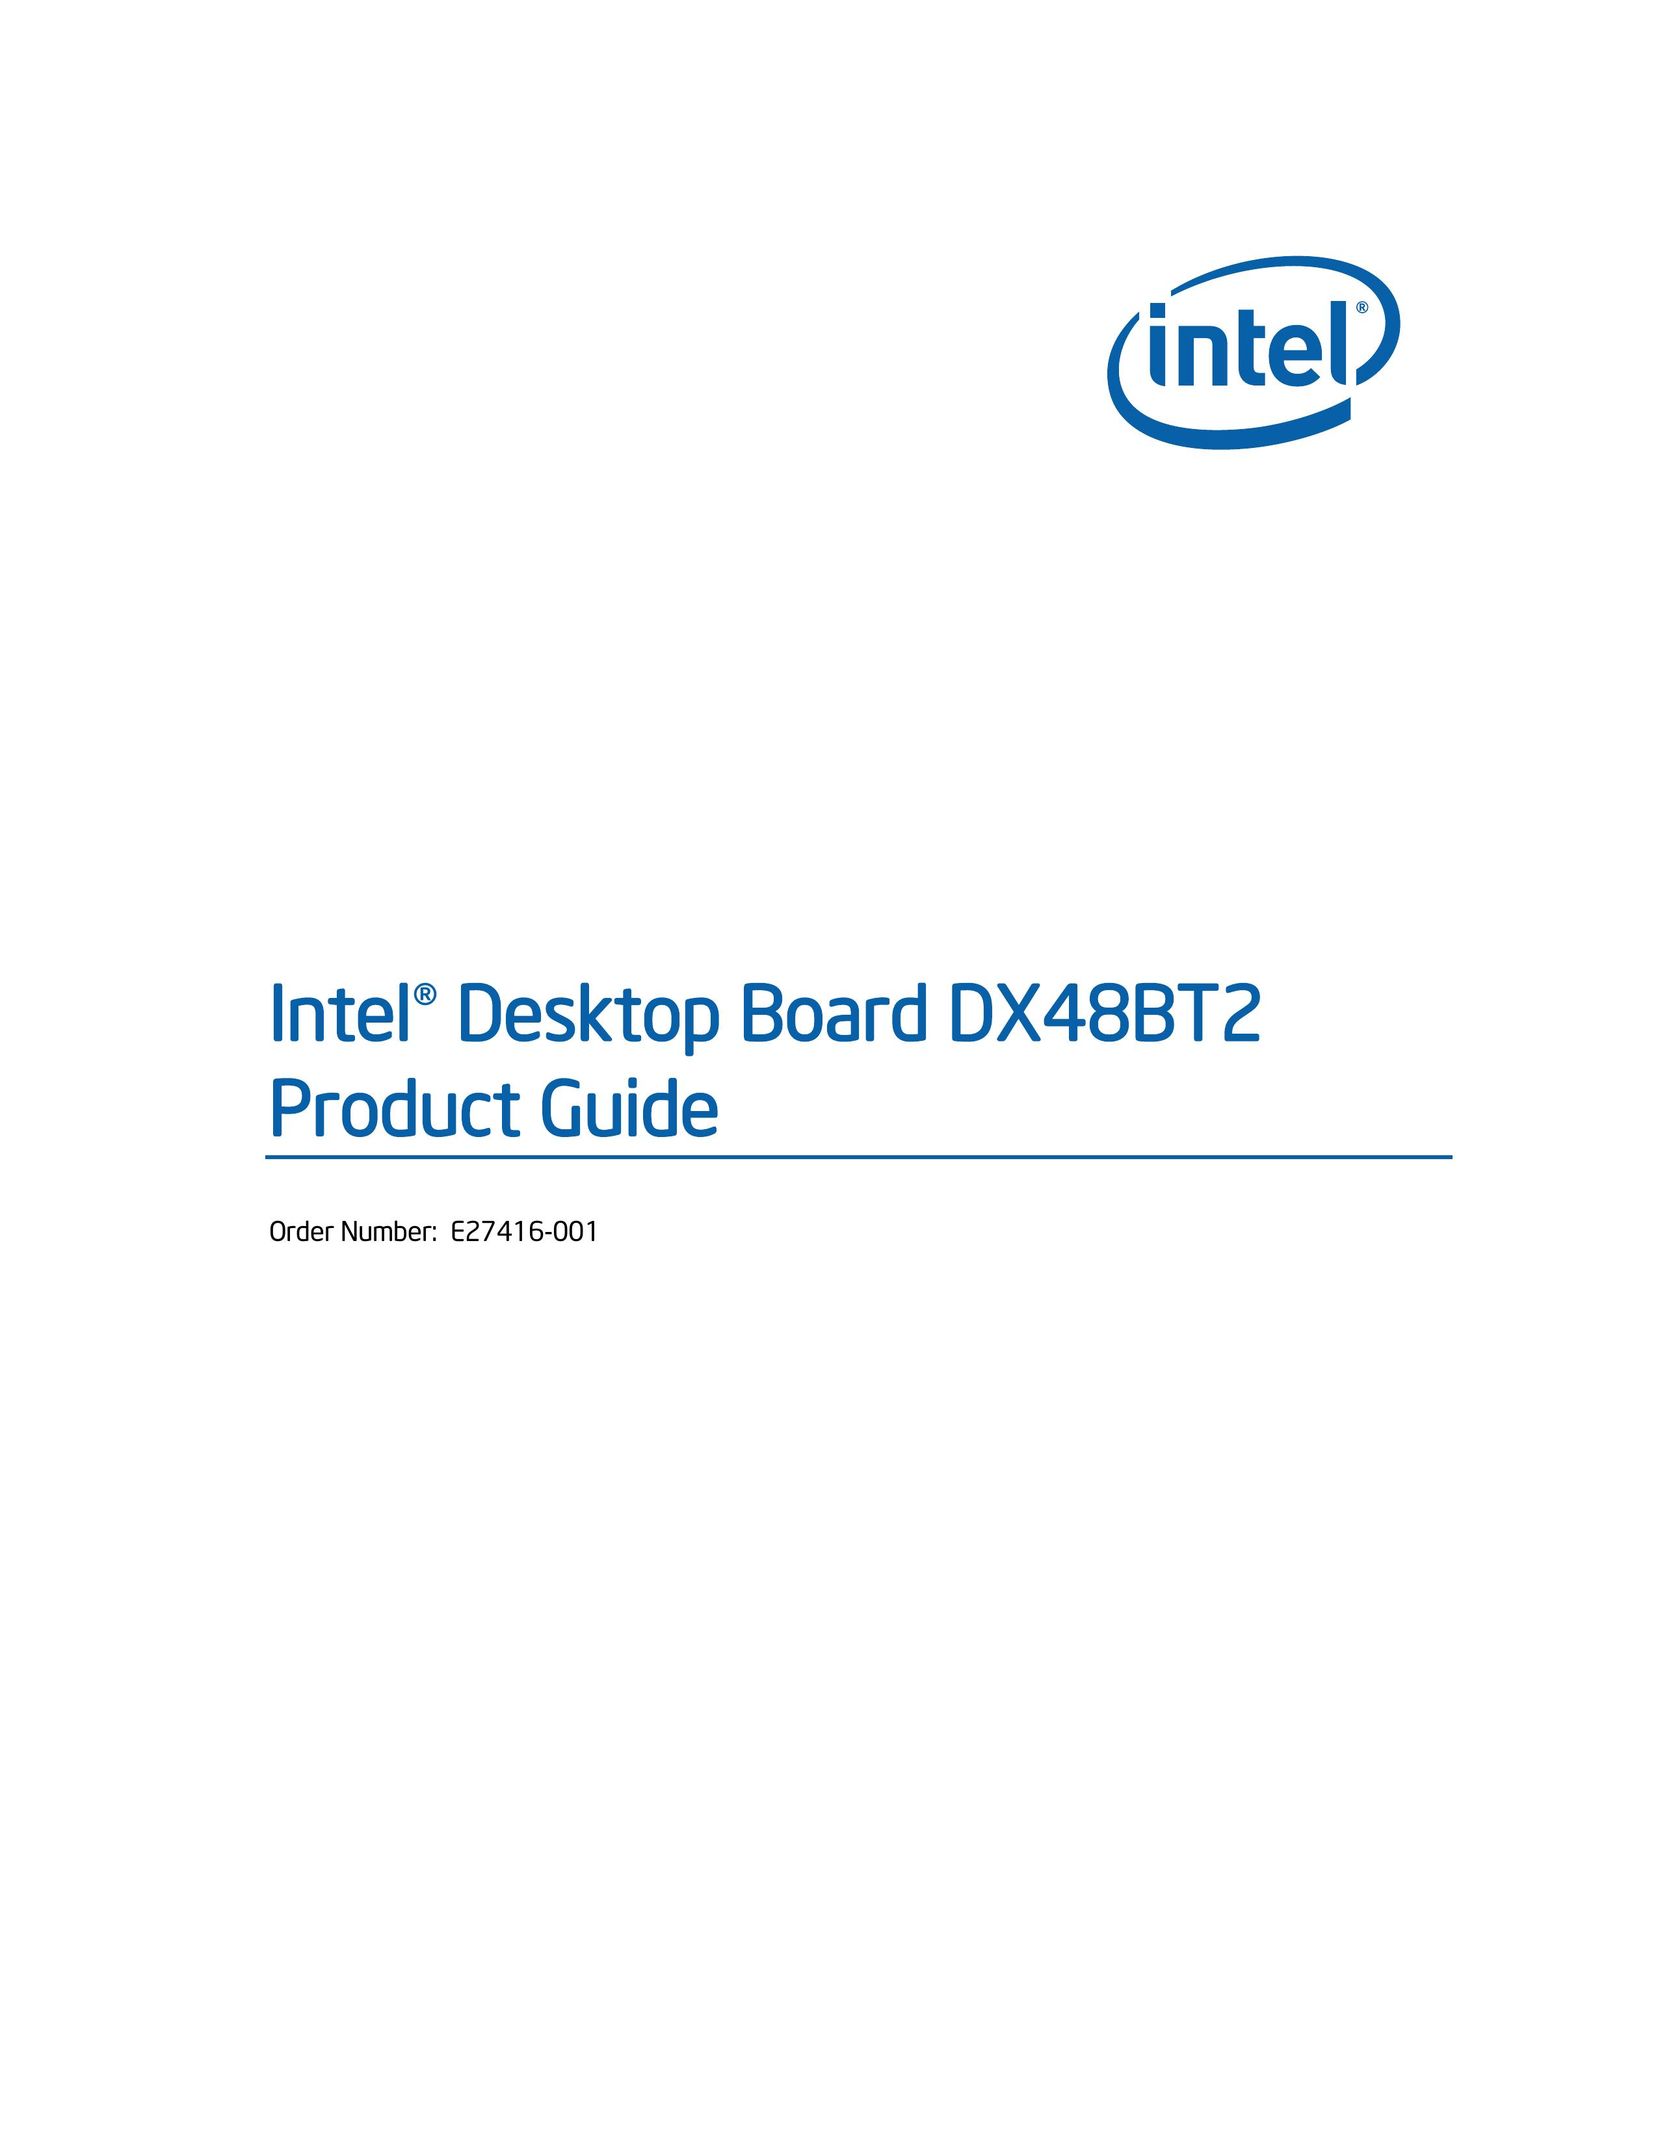 Intel DX48BT2 Telephone User Manual